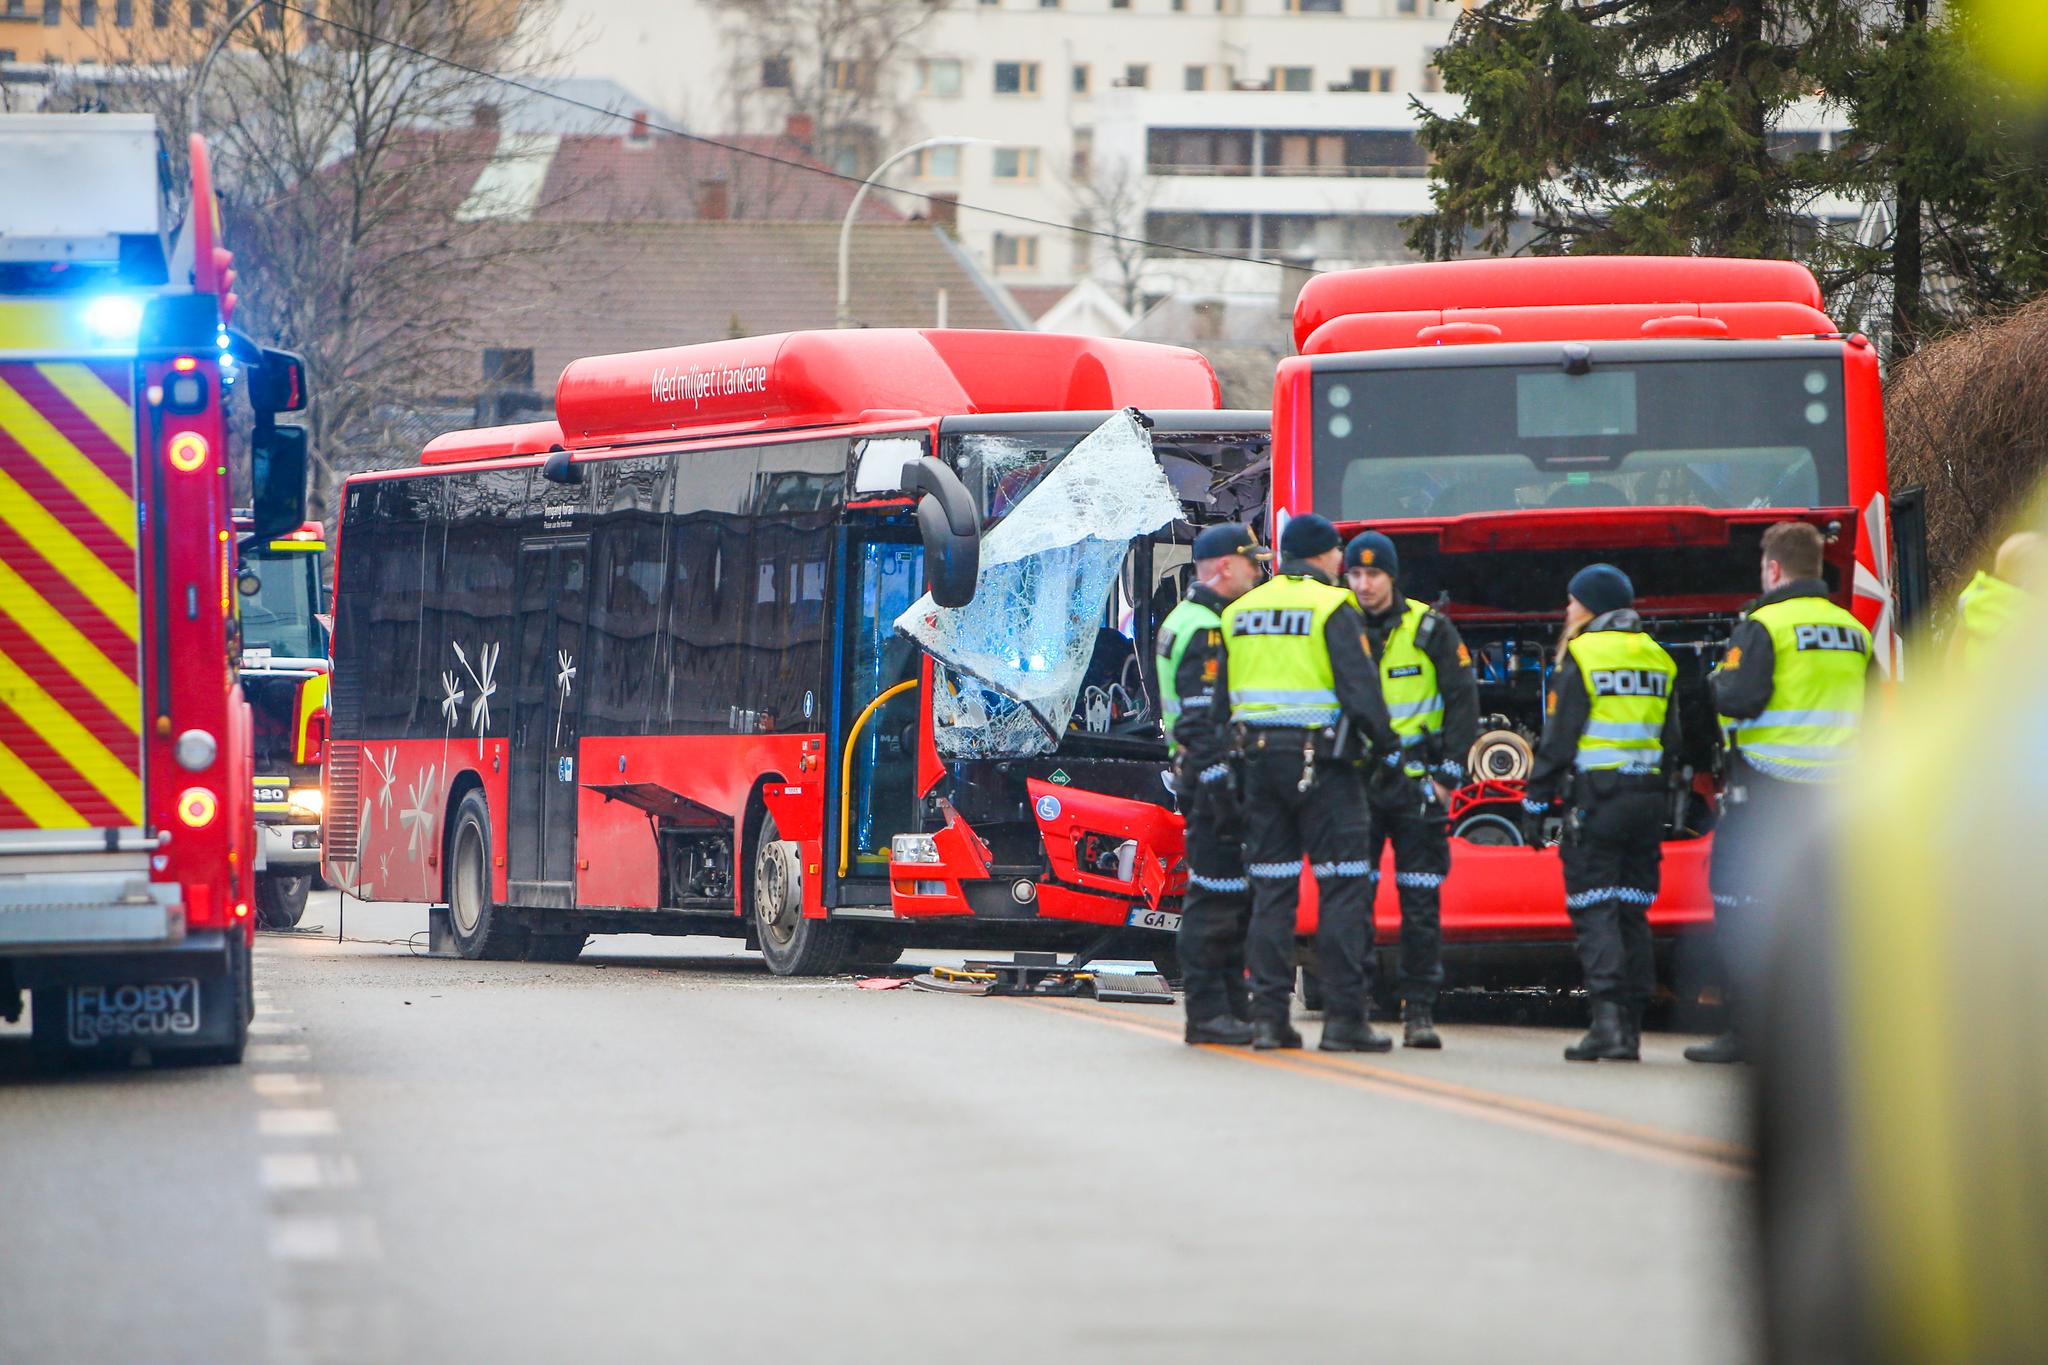 Onsdag omkom to personer i trafikkulykker. En av dem var en bussjåfør som omkom i en ulykke i Fredrikstad. Hittil i år har 117 personer omkommet i trafikkulykker i Norge, mot 80 i hele 2021.